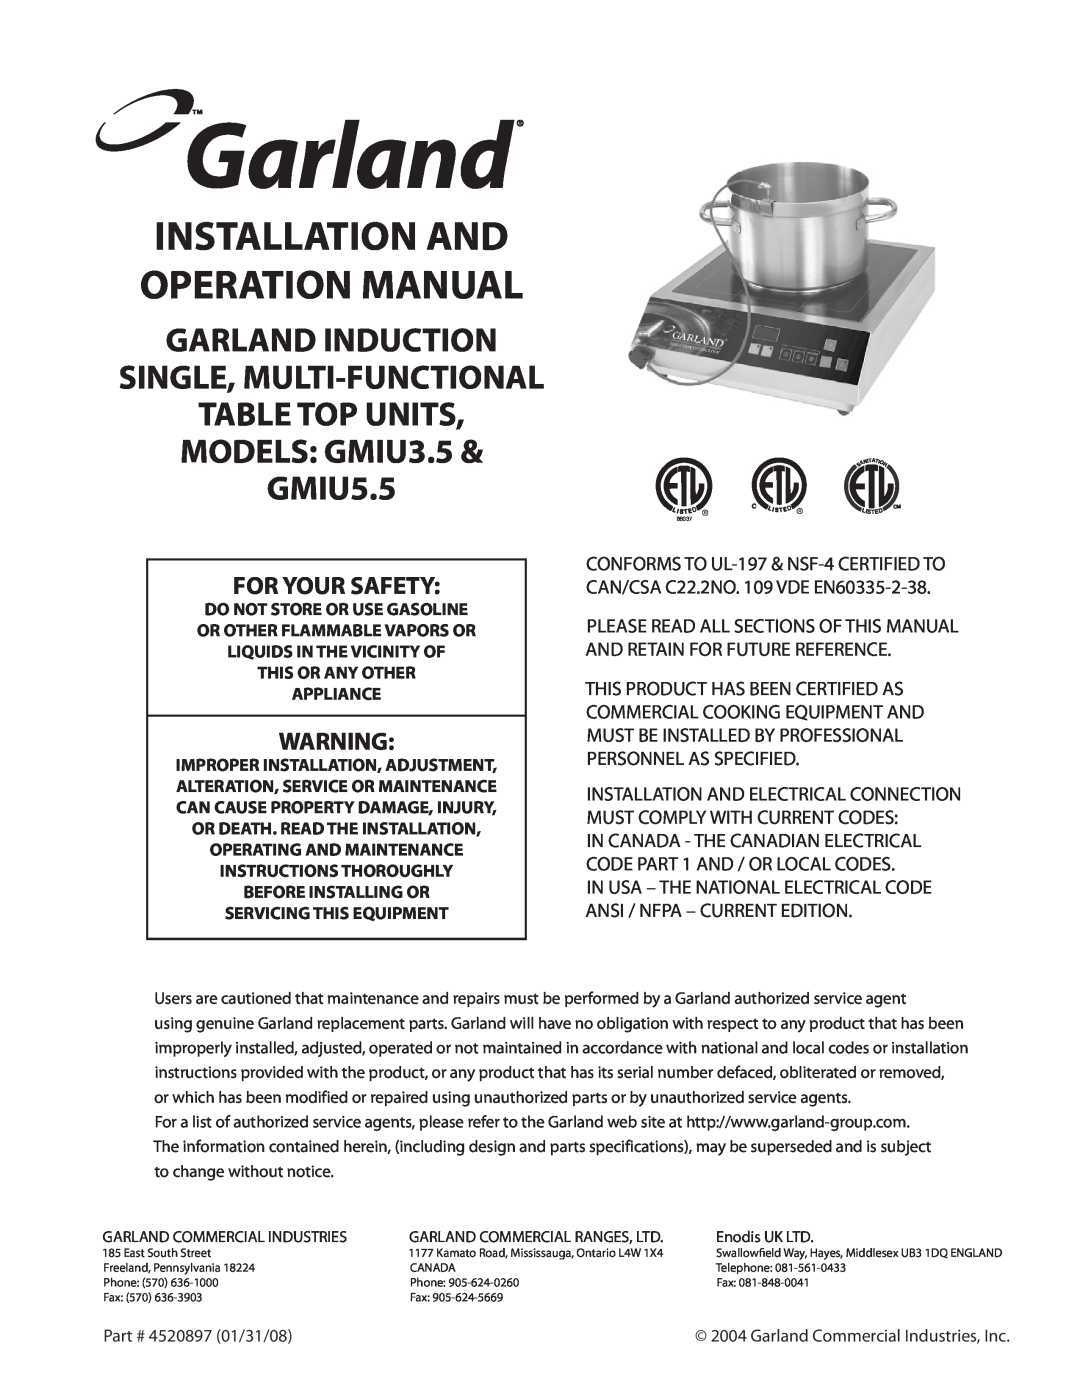 Garland operation manual Garland Induction Single, Multi-Functional, TABLE TOP UNITS MODELS GMIU3.5 & GMIU5.5 